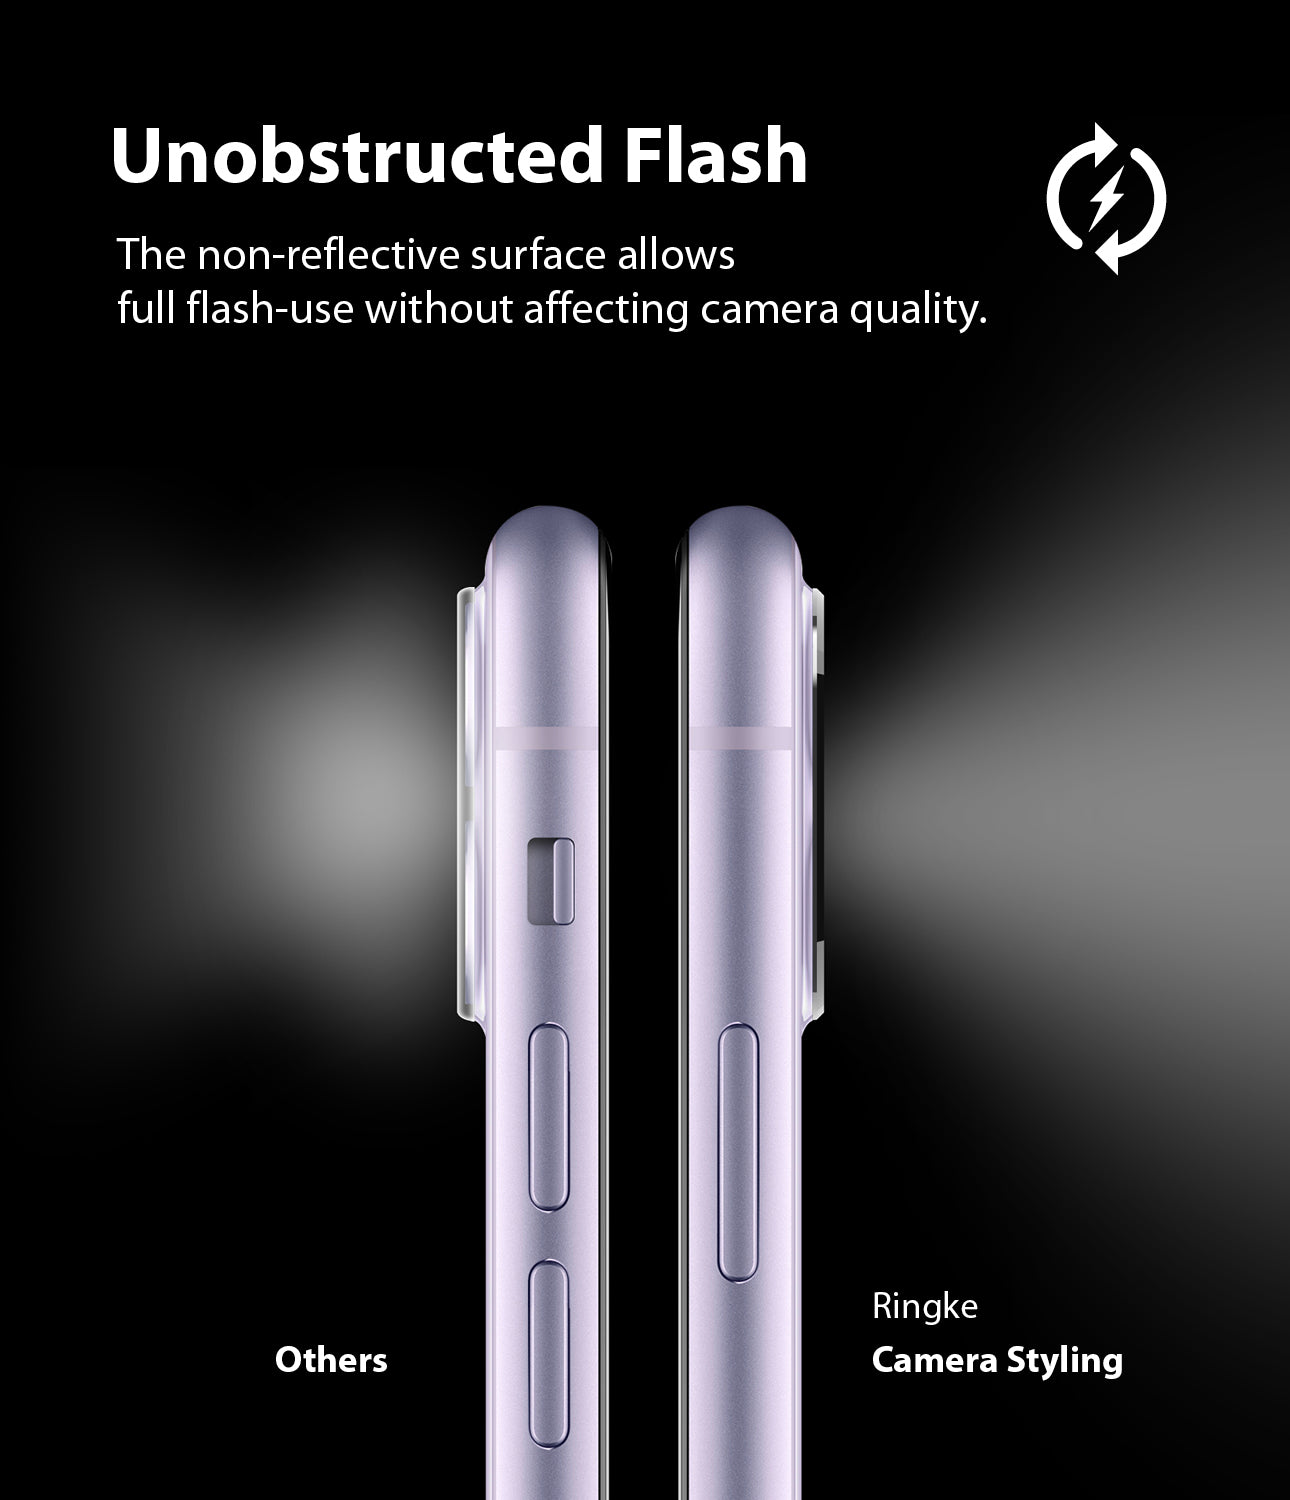 unbostructed flash